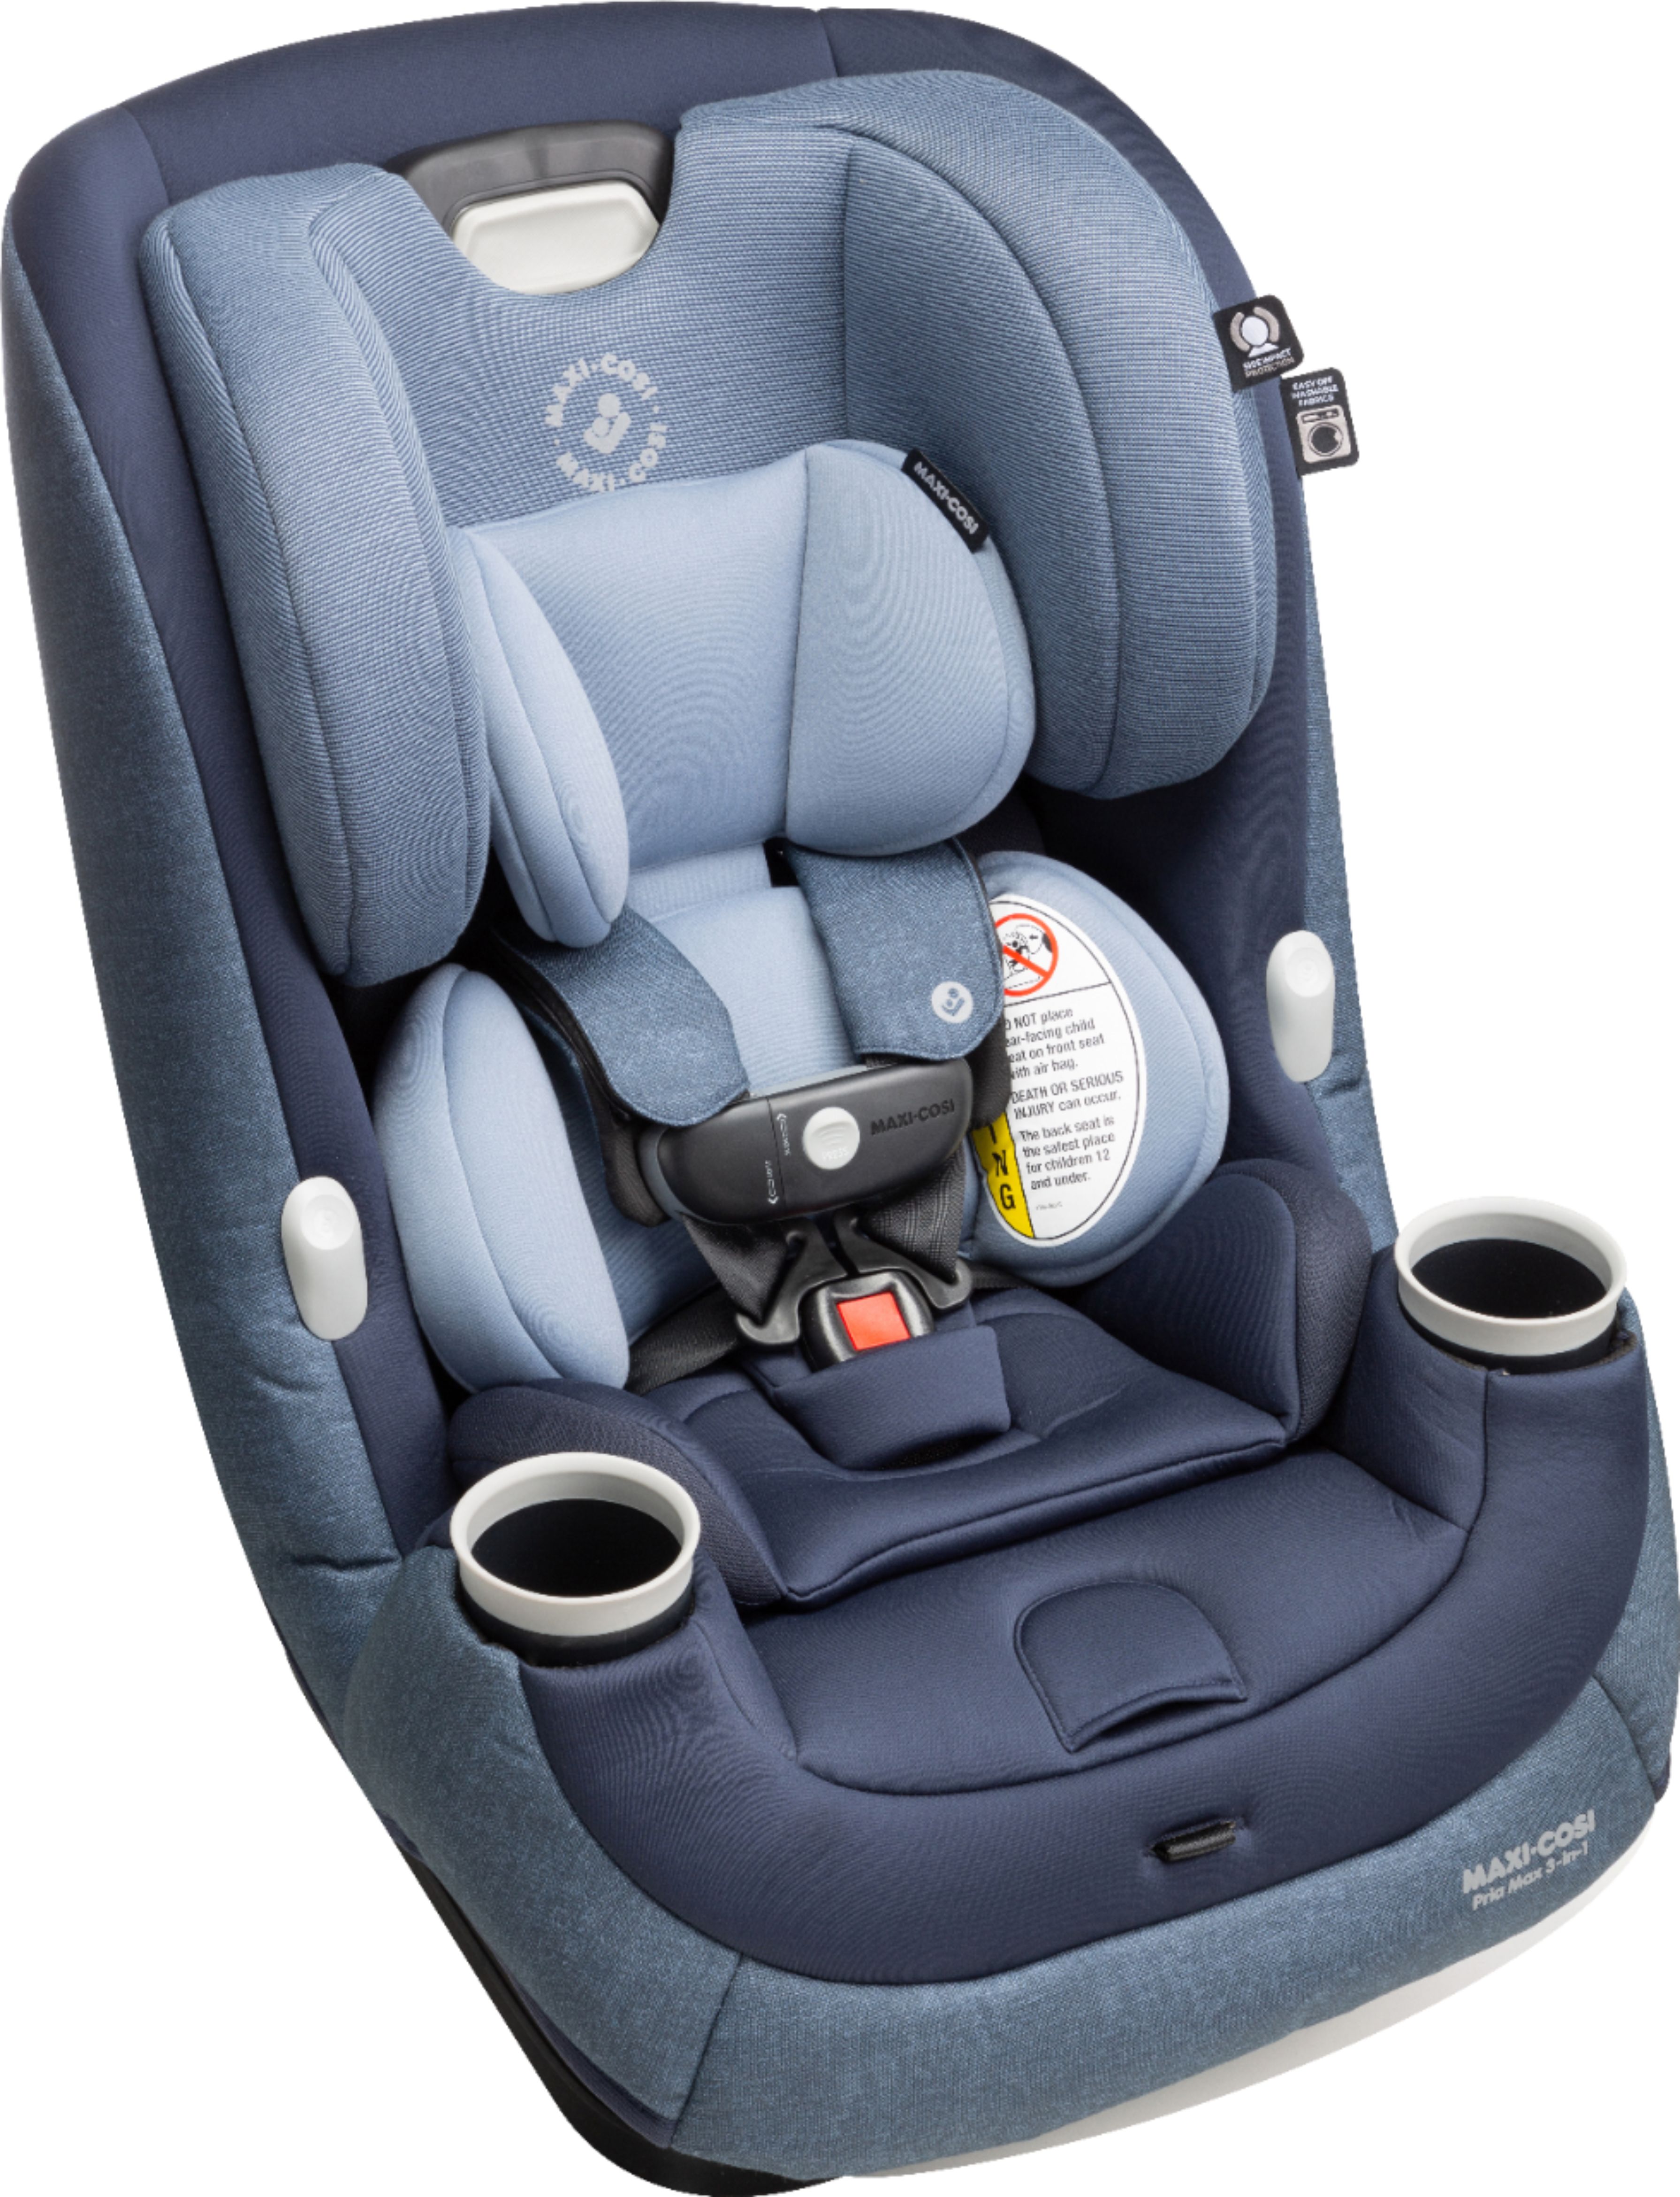 Angle View: Maxi-Cosi - Pria Max All-in-One Convertible Car Seat - Blue